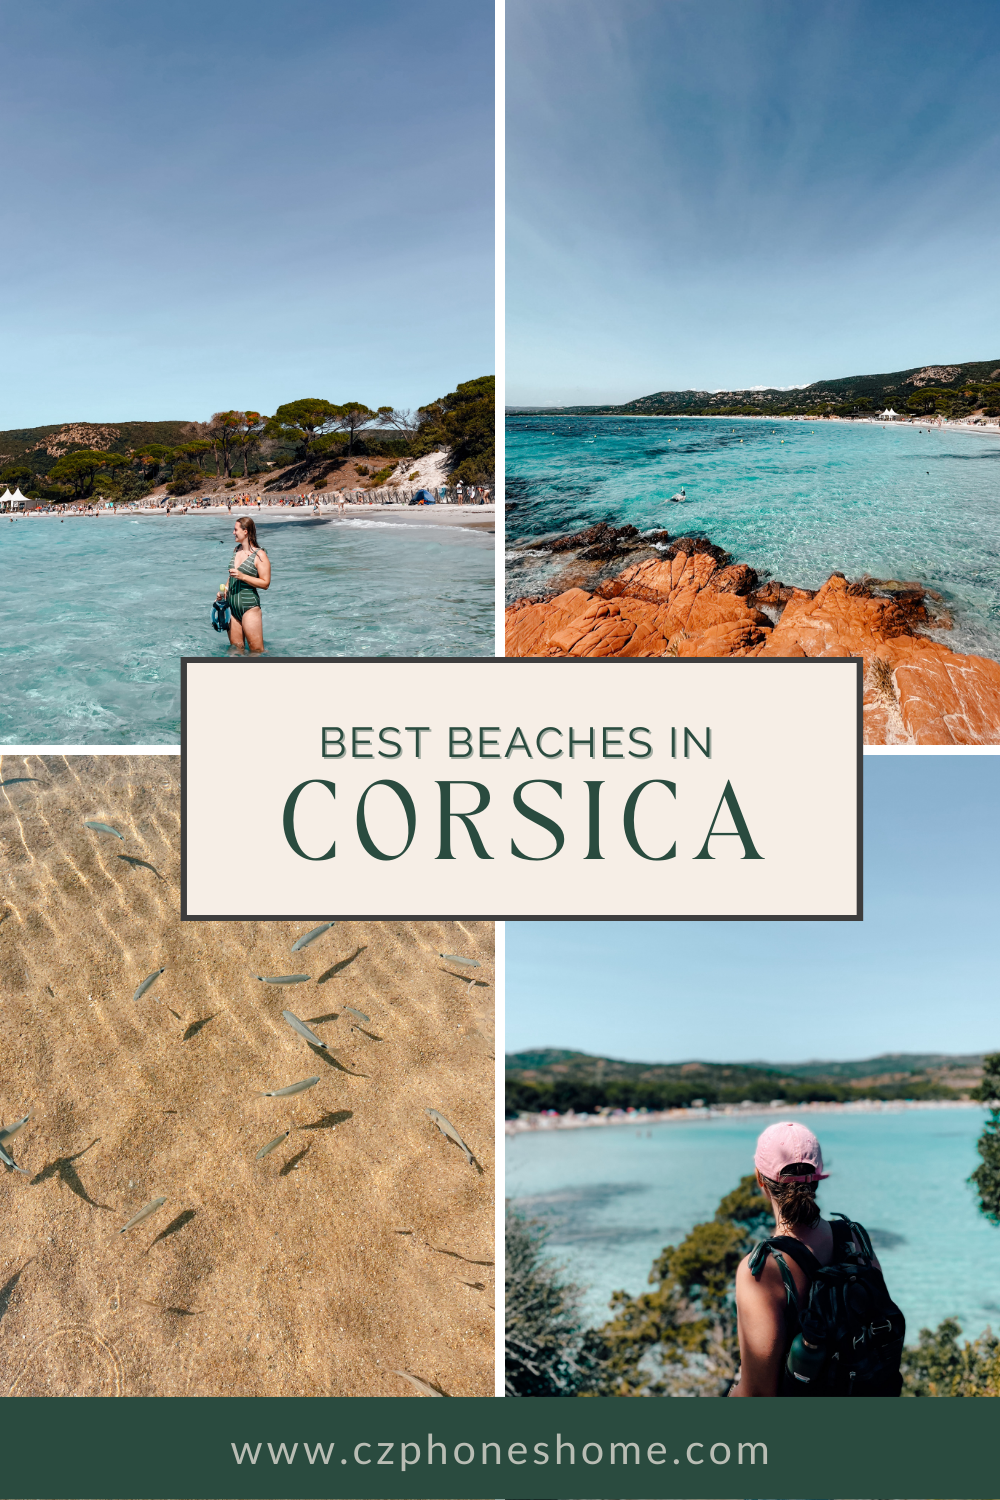 Best beaches in Corsica